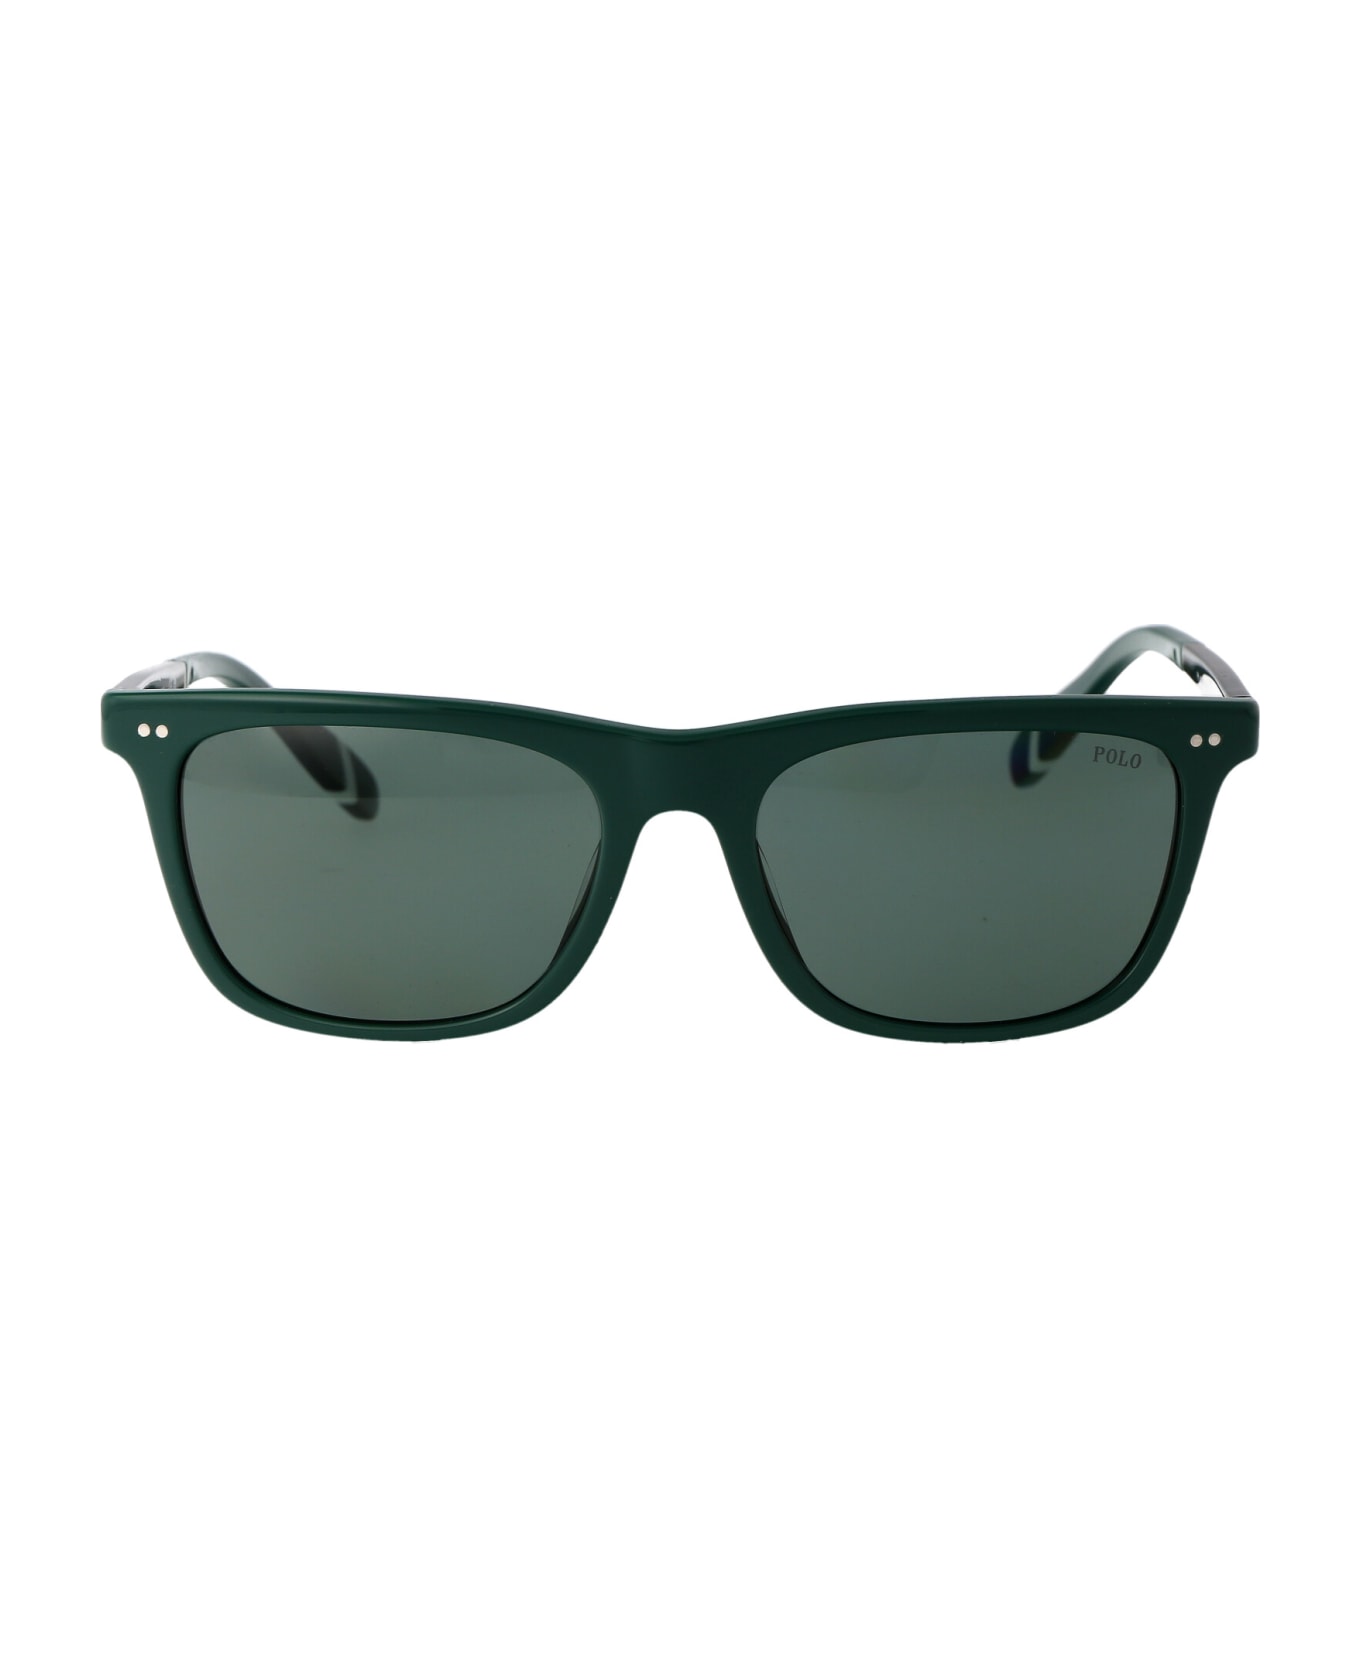 Polo Ralph Lauren 0ph4205u Sunglasses - 614171 Shiny Green